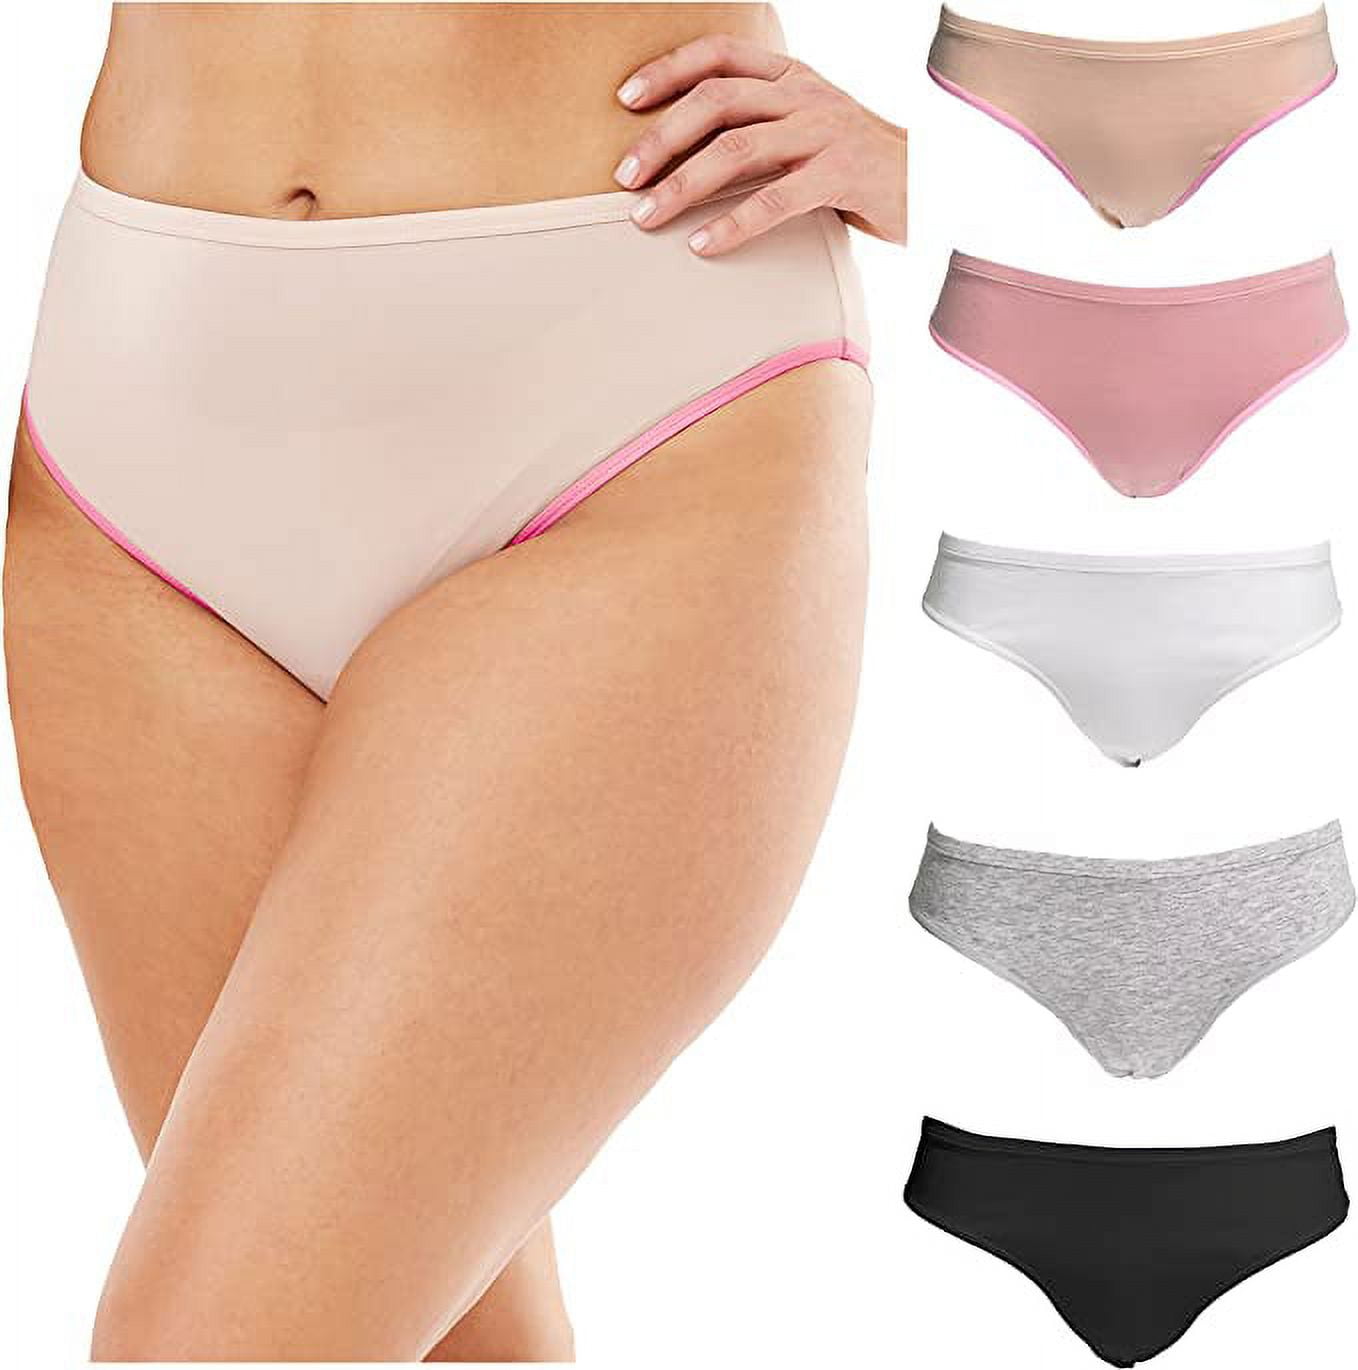 Emprella Womens Underwear Bikini Brief Panties with Lace-(5 Pack